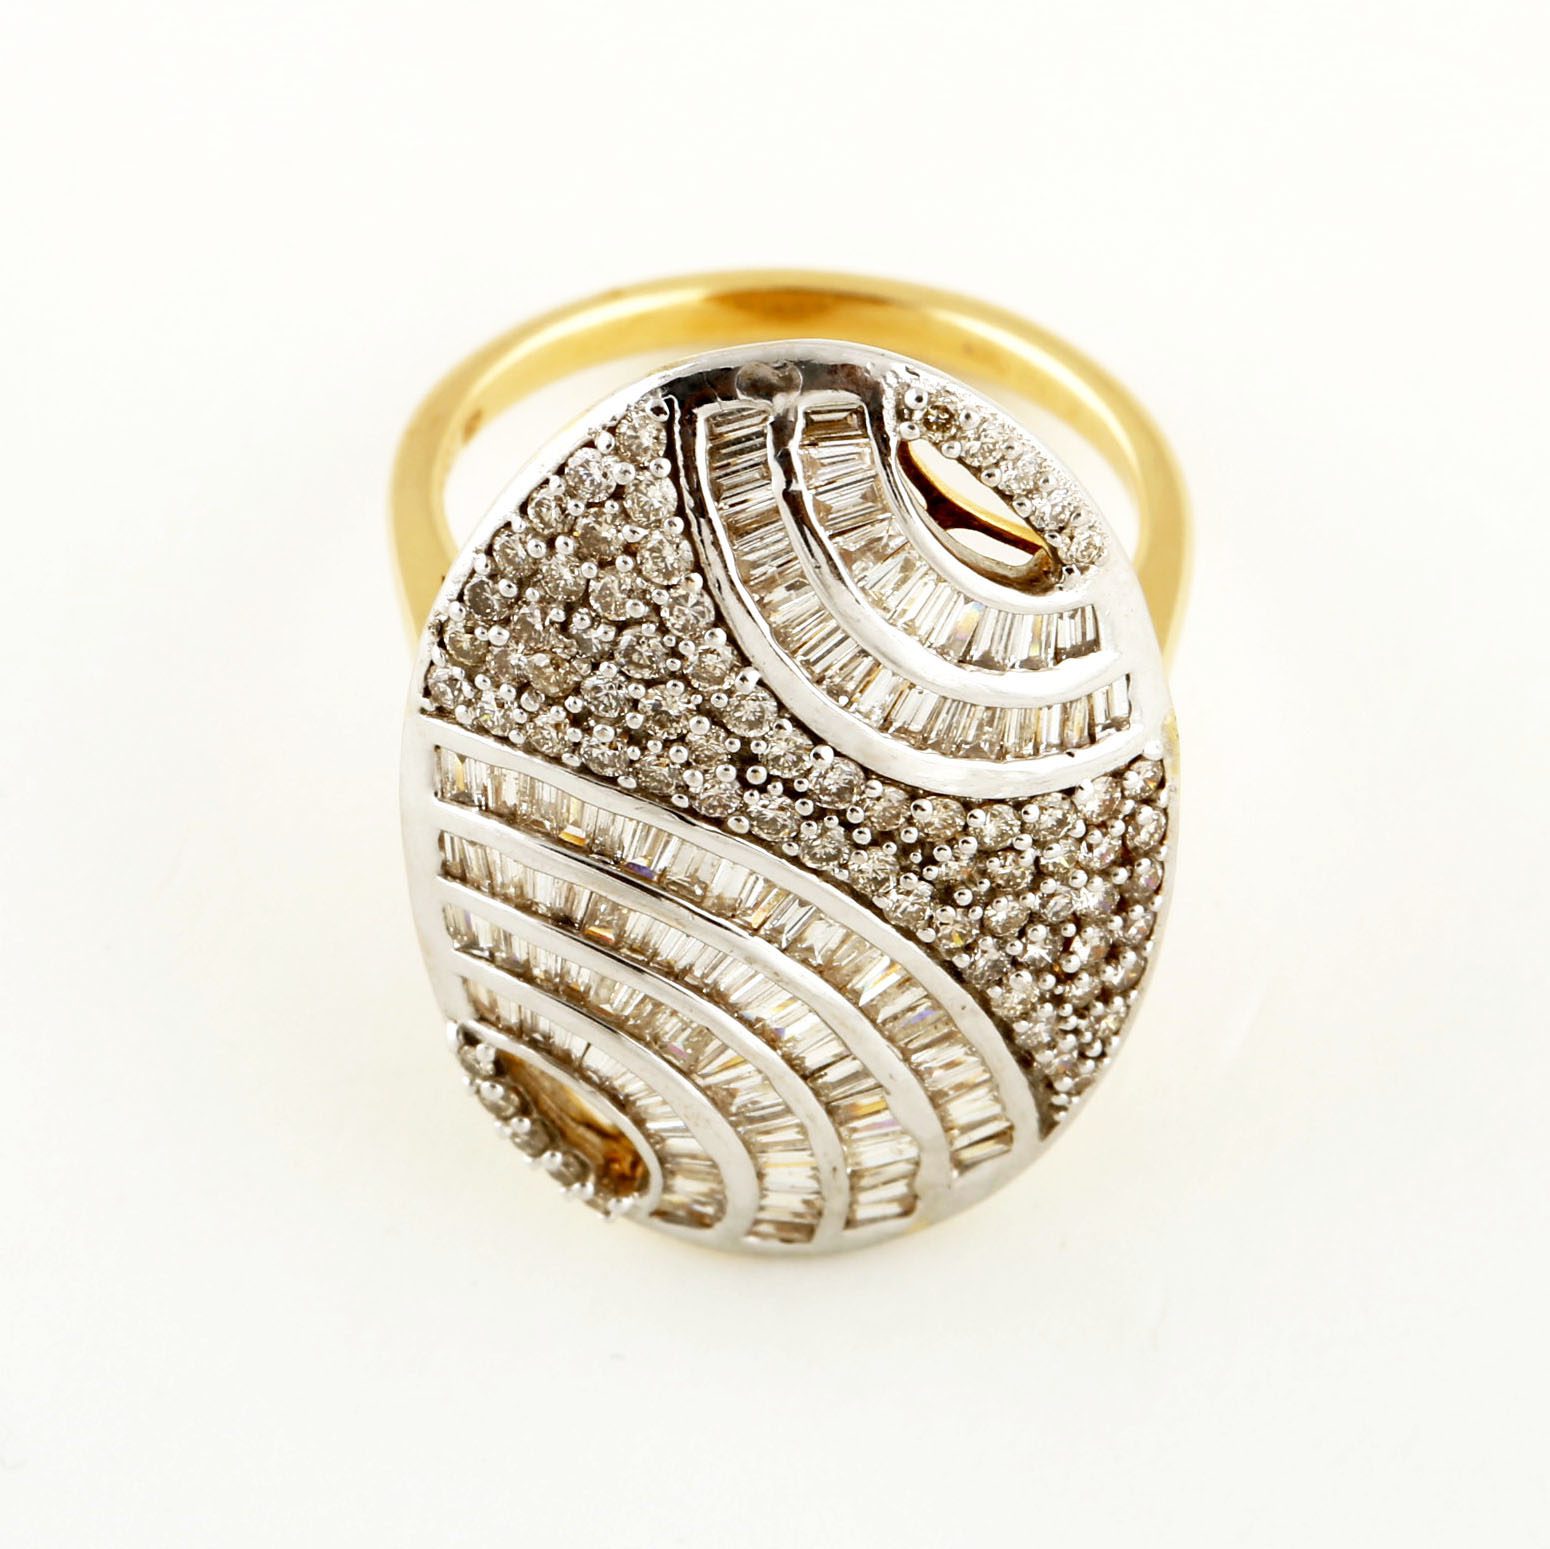 Guru Nanak Jewellers - Party wear ladies rings Certified diamonds #diamonds  #rosegold #gold #frosting #antique #happy #wedding #seasons #jarkan #ring  #perfect #finishing #own #manufacturer #real #stone #jewellerylover  #designs #diamonds ...